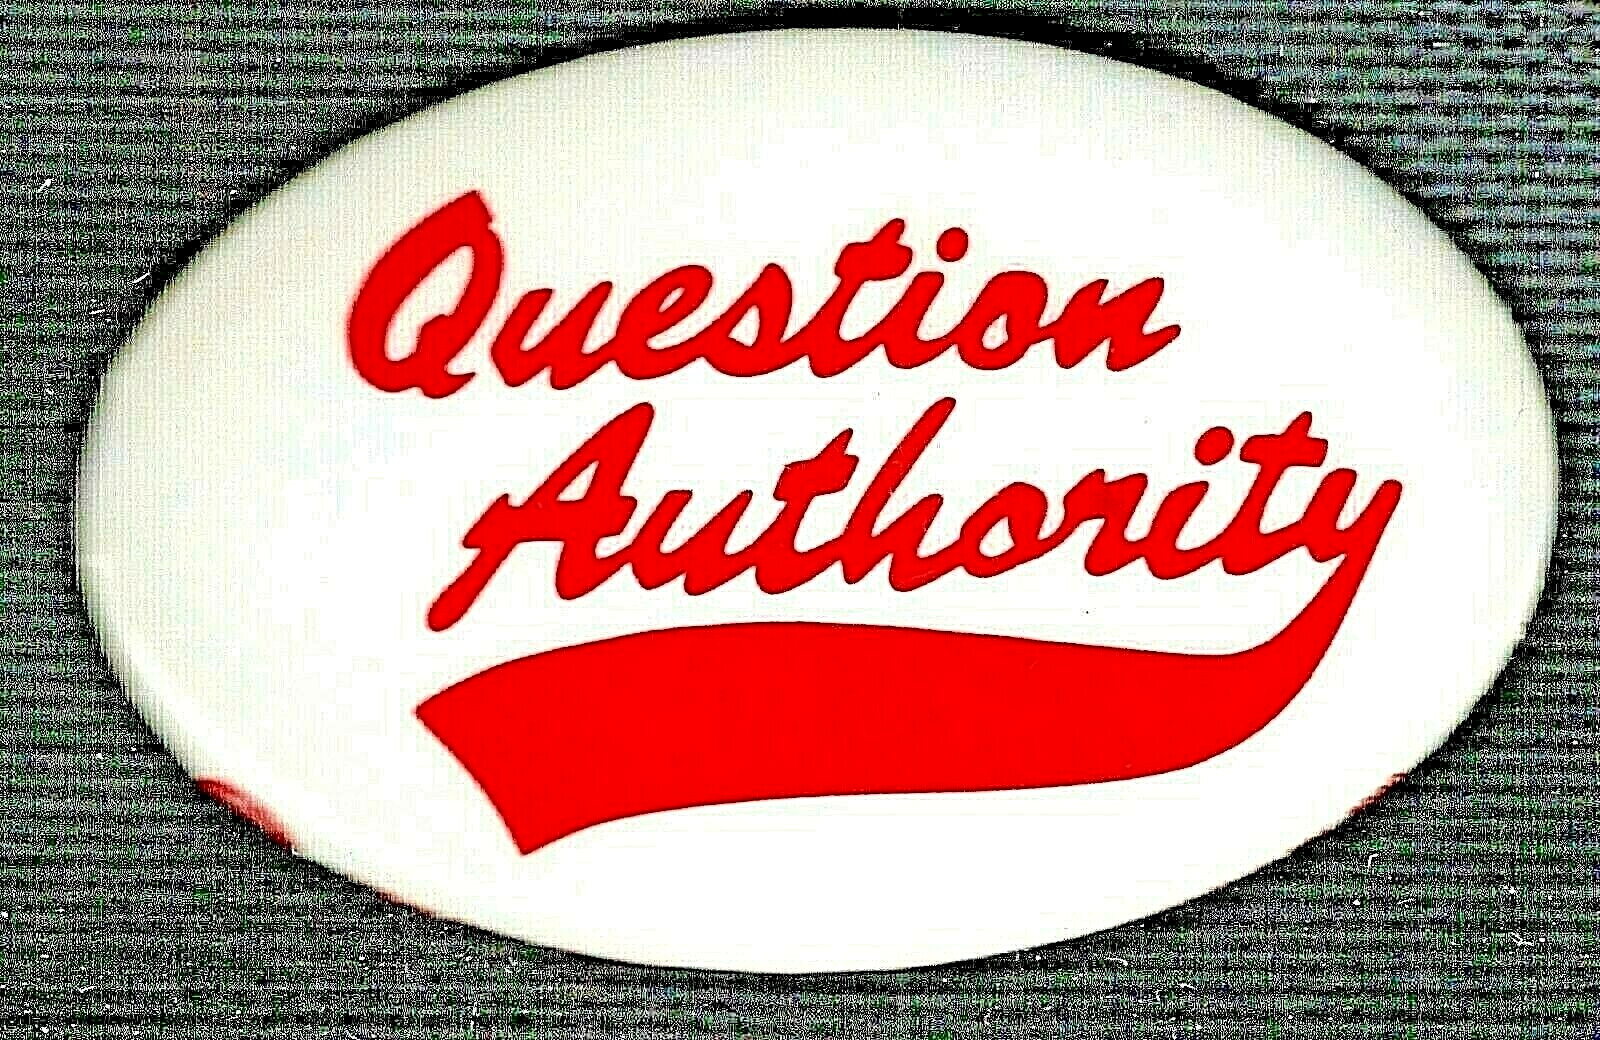 QUESTION AUTHORITY - 1960's anti establishment slogan large oval pinback button